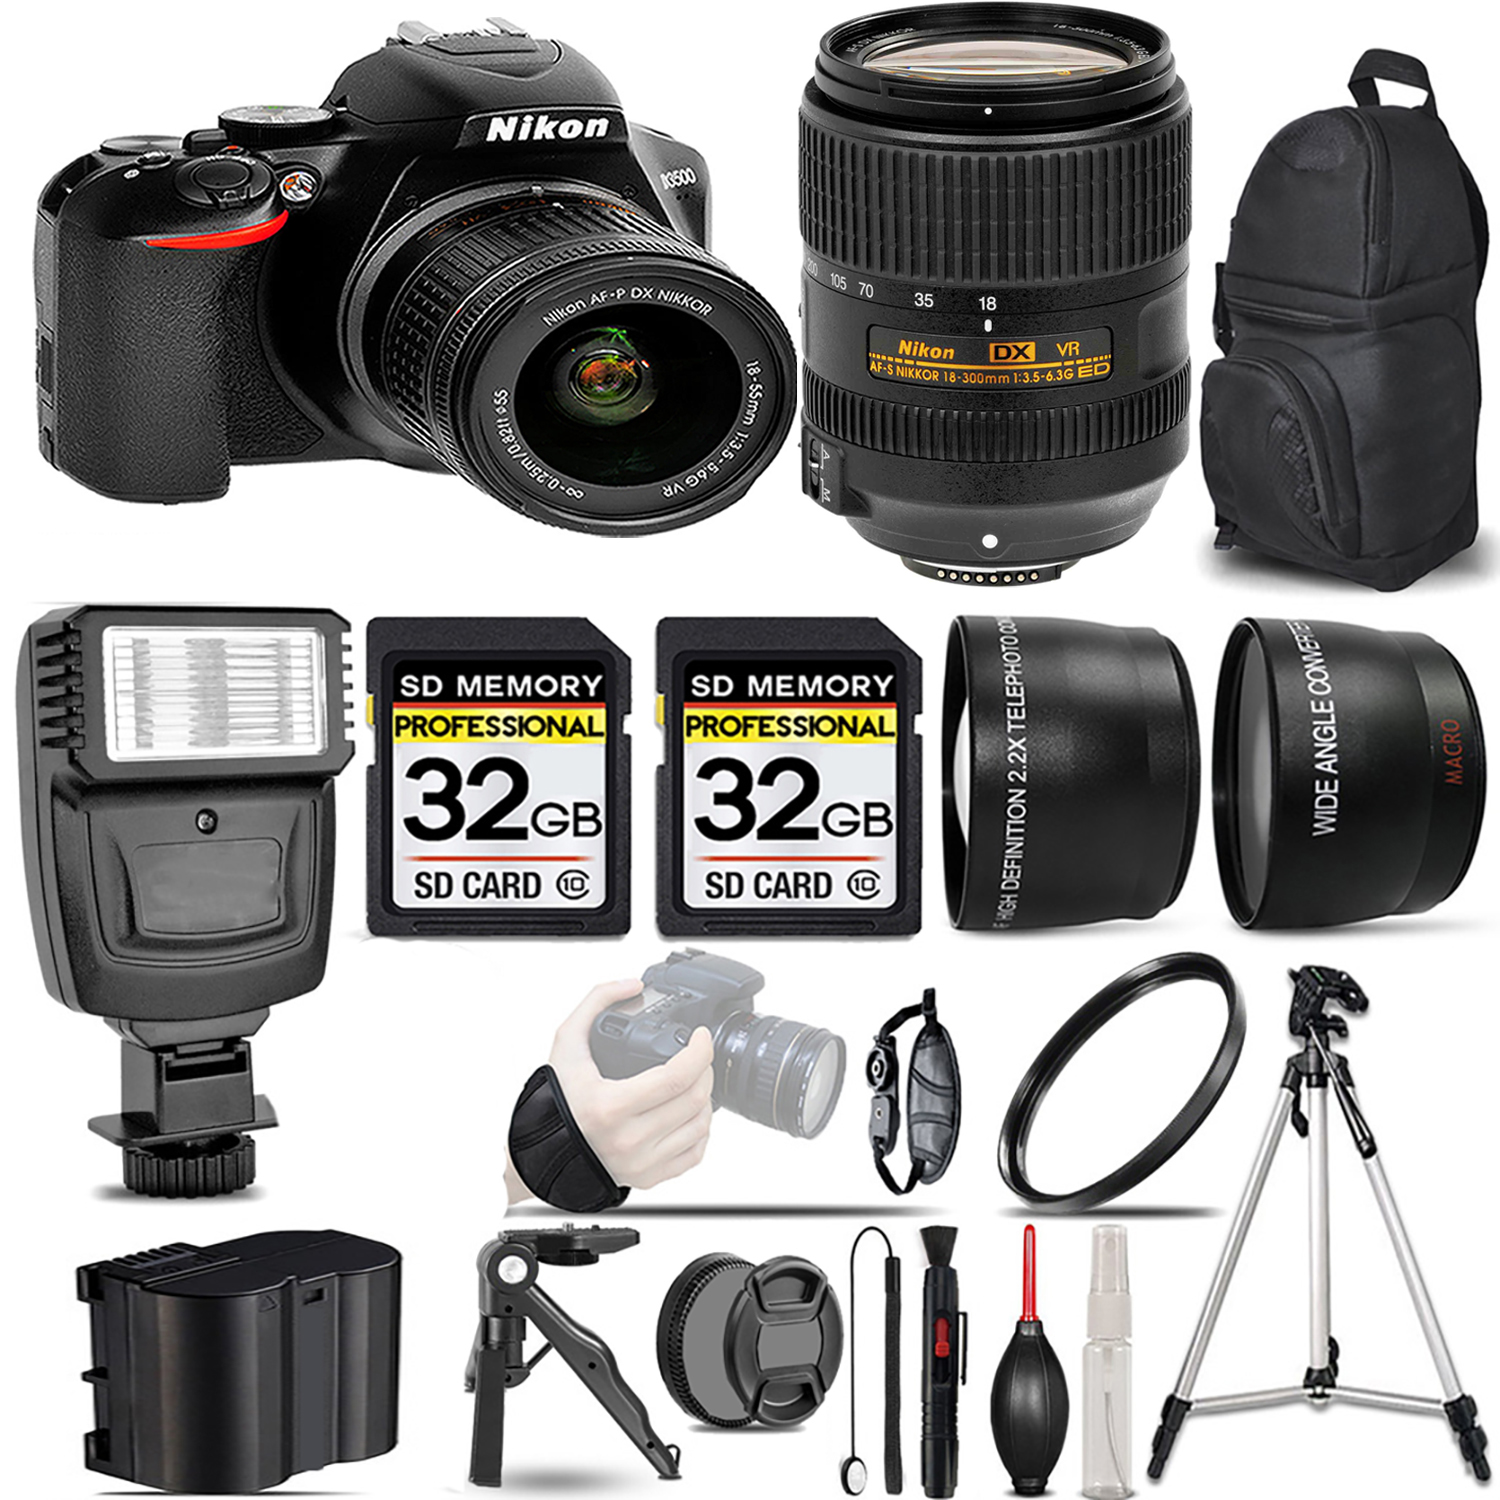 D3500 DSLR Camera with 18-55mm Lens + 18- 300mm Lens + Flash + 64GB -  Kit *FREE SHIPPING*